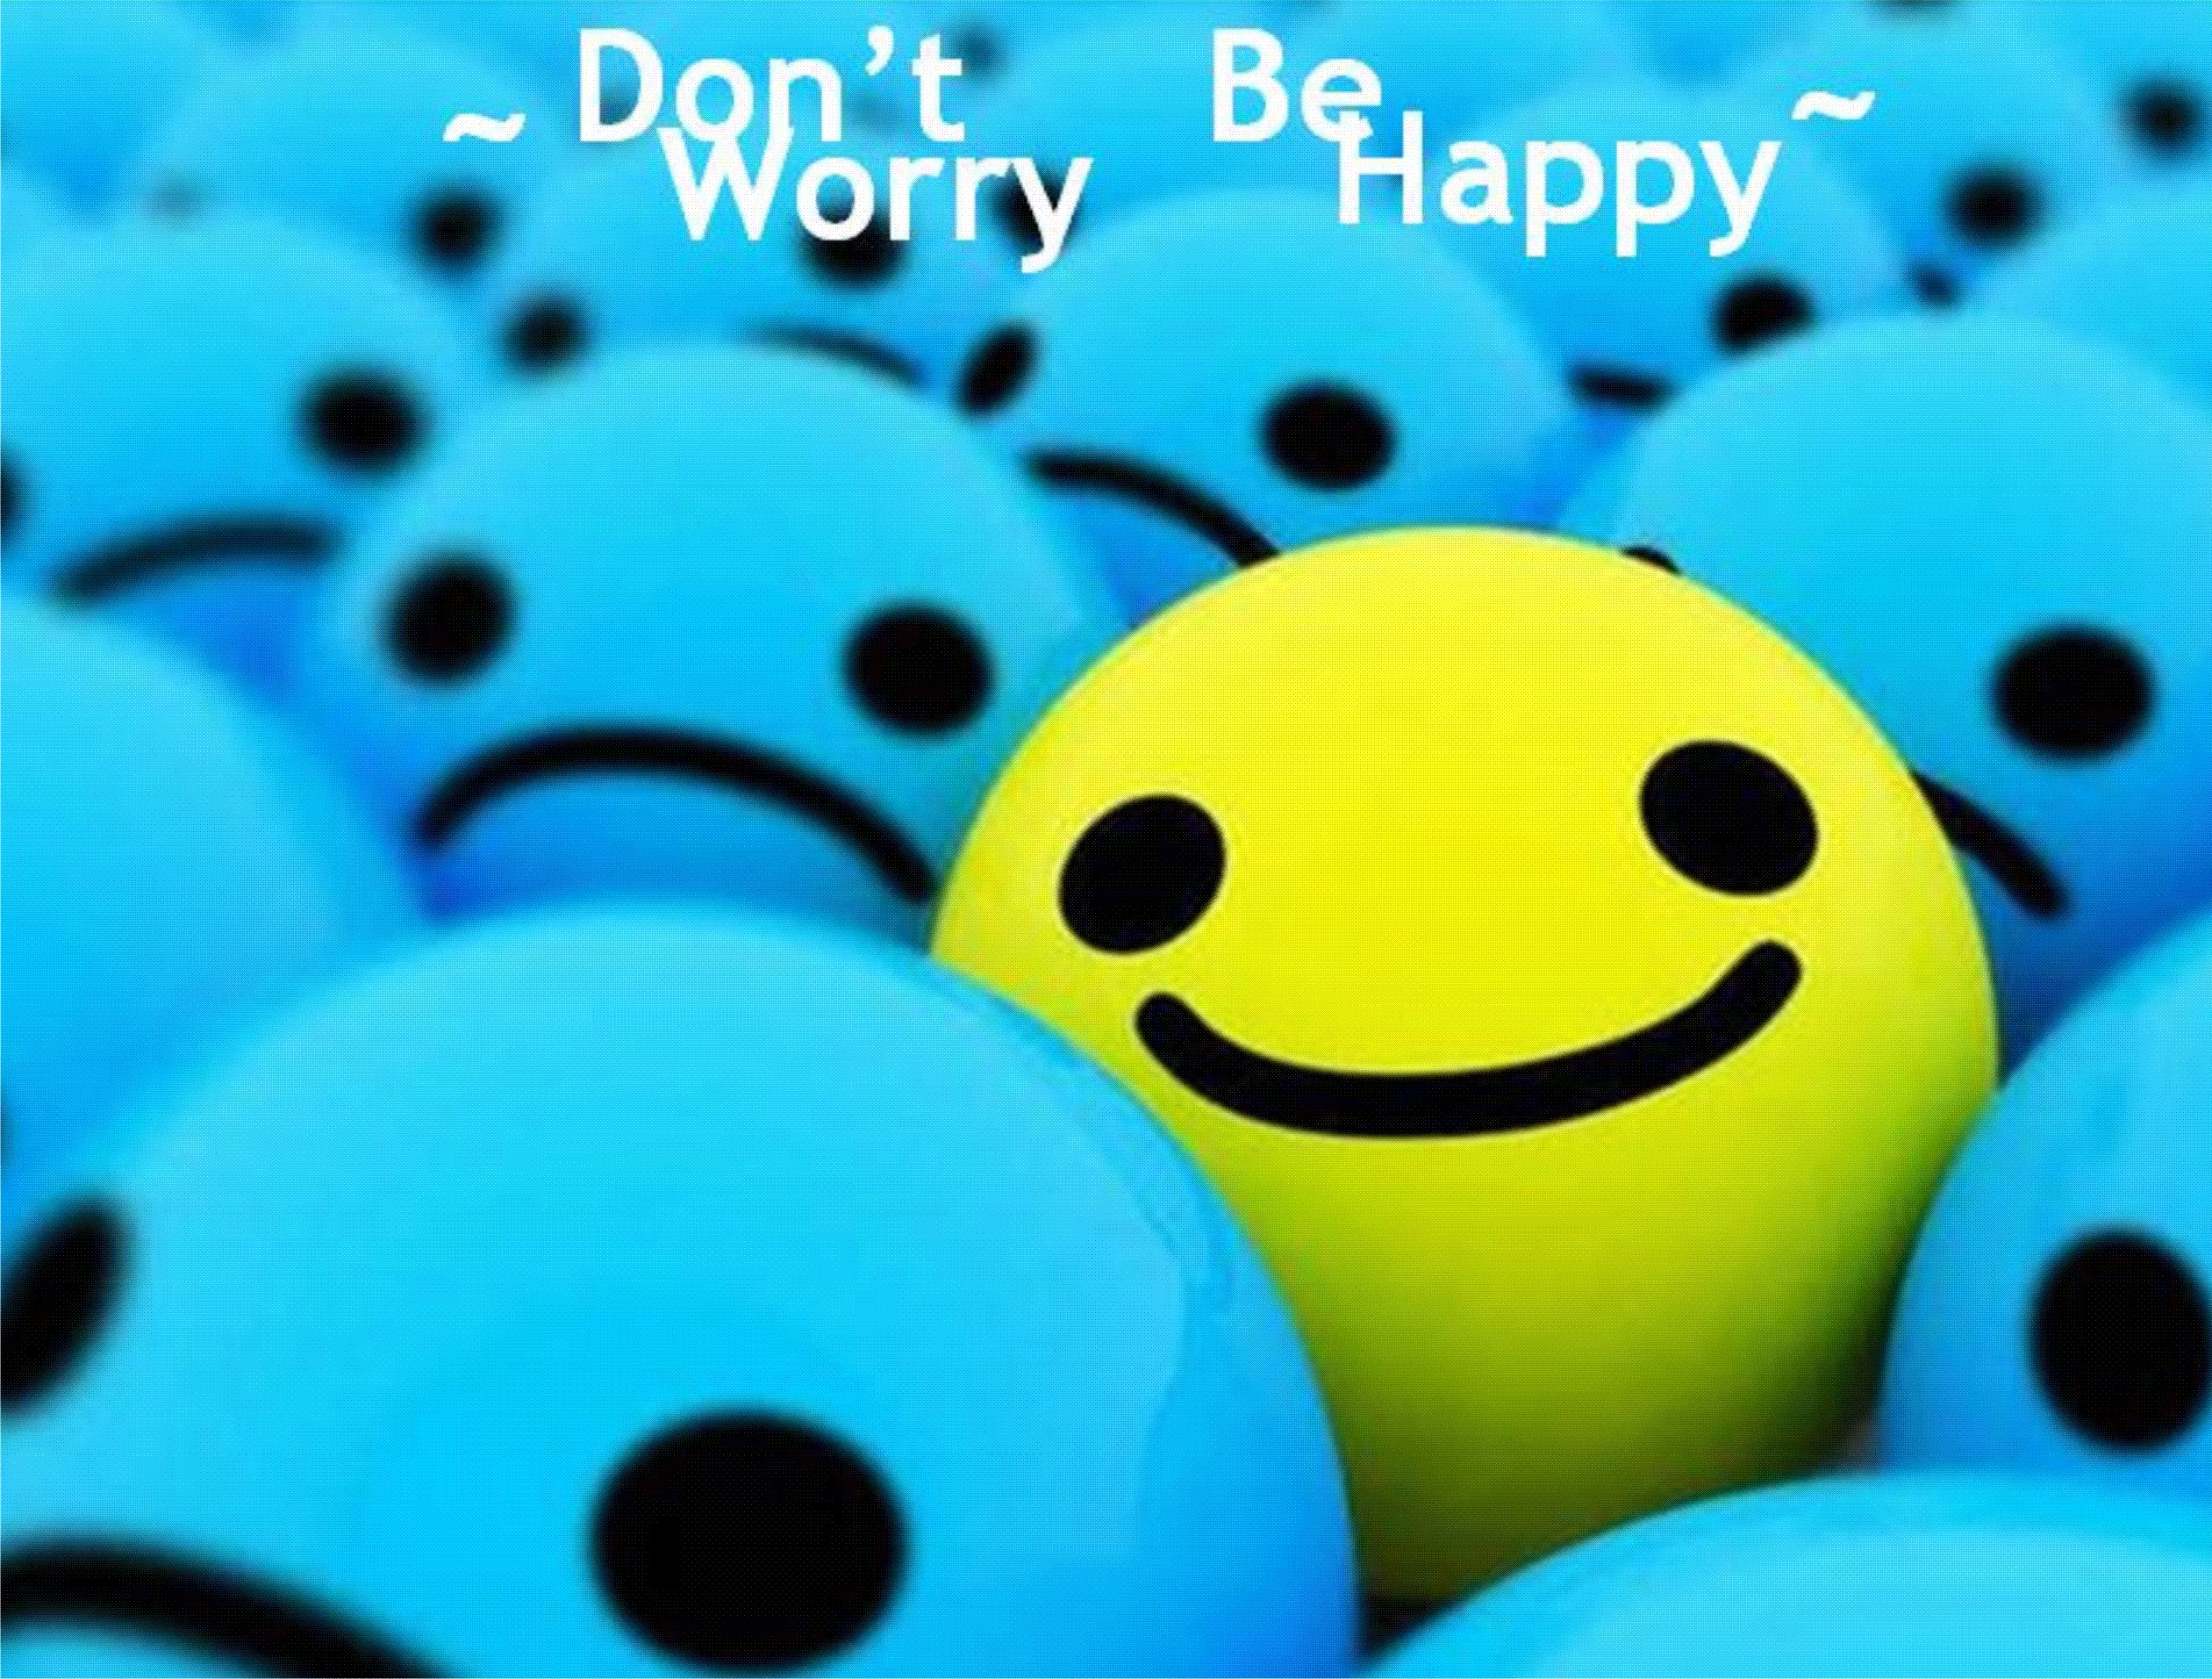 Dont_worry_be_happy.jpg